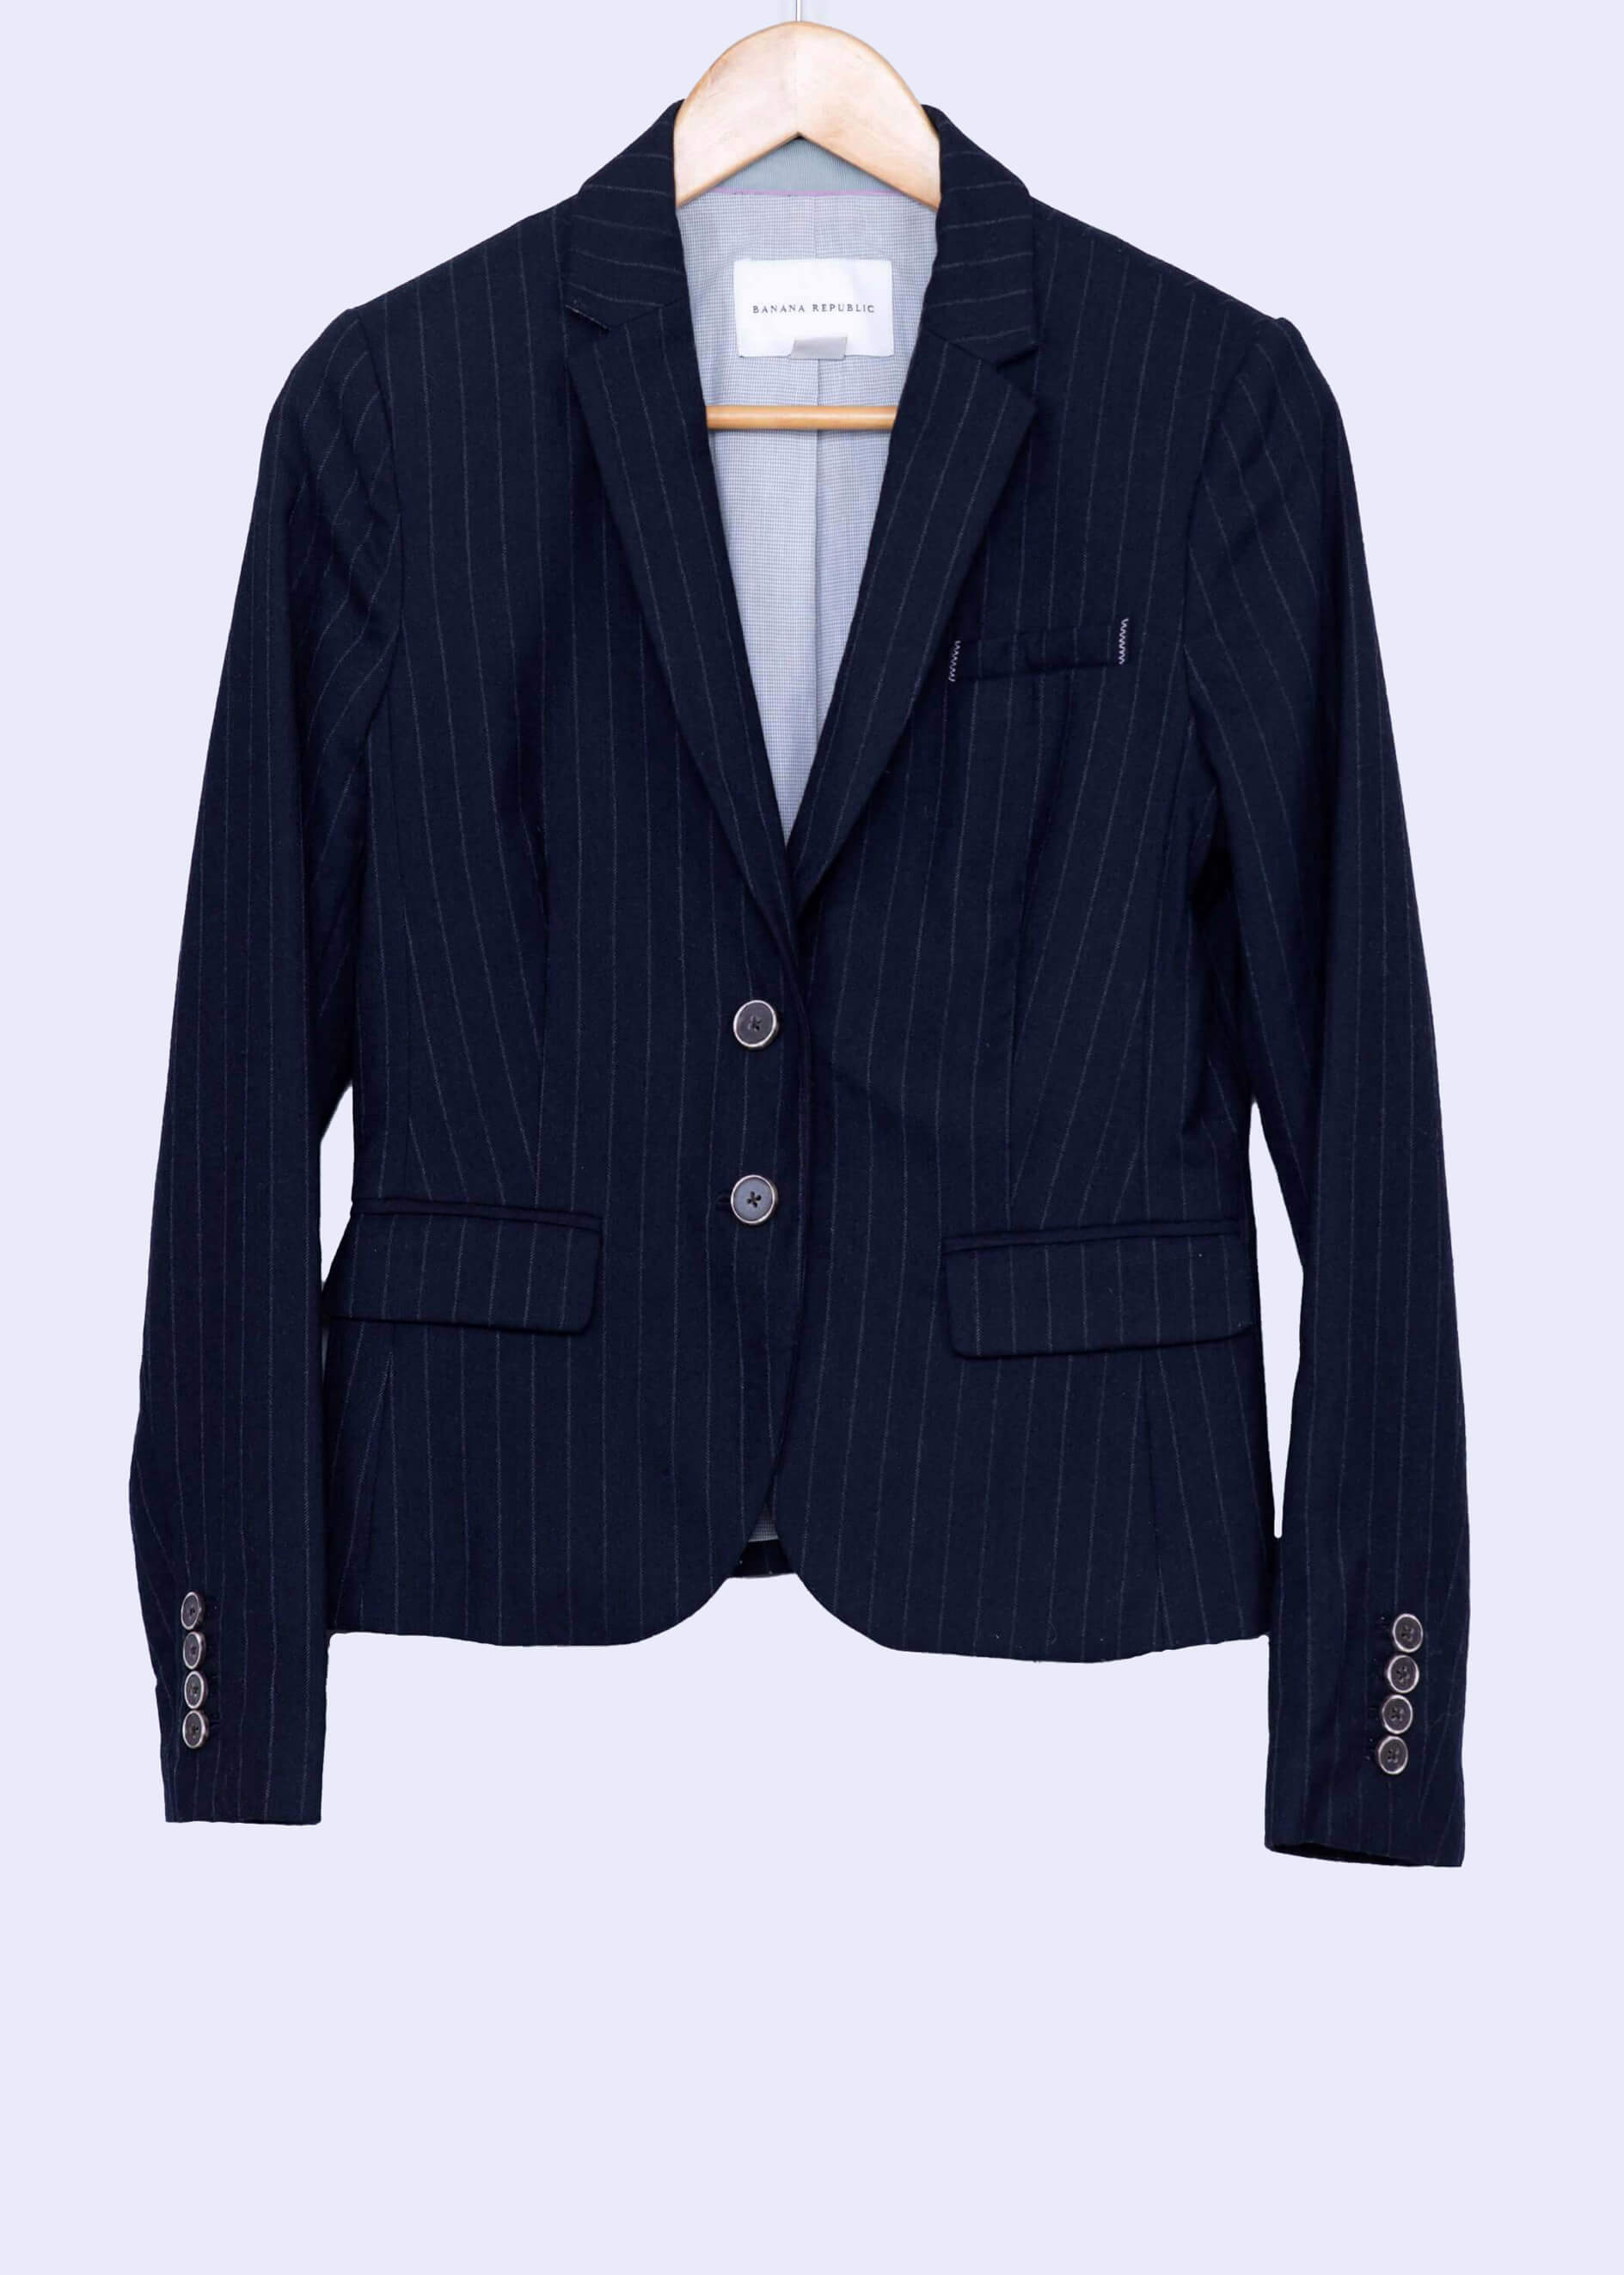 Banana Republic Pinstriped Monogram Suit Jacket Blazer 46R - Slim - NEW  w/tags